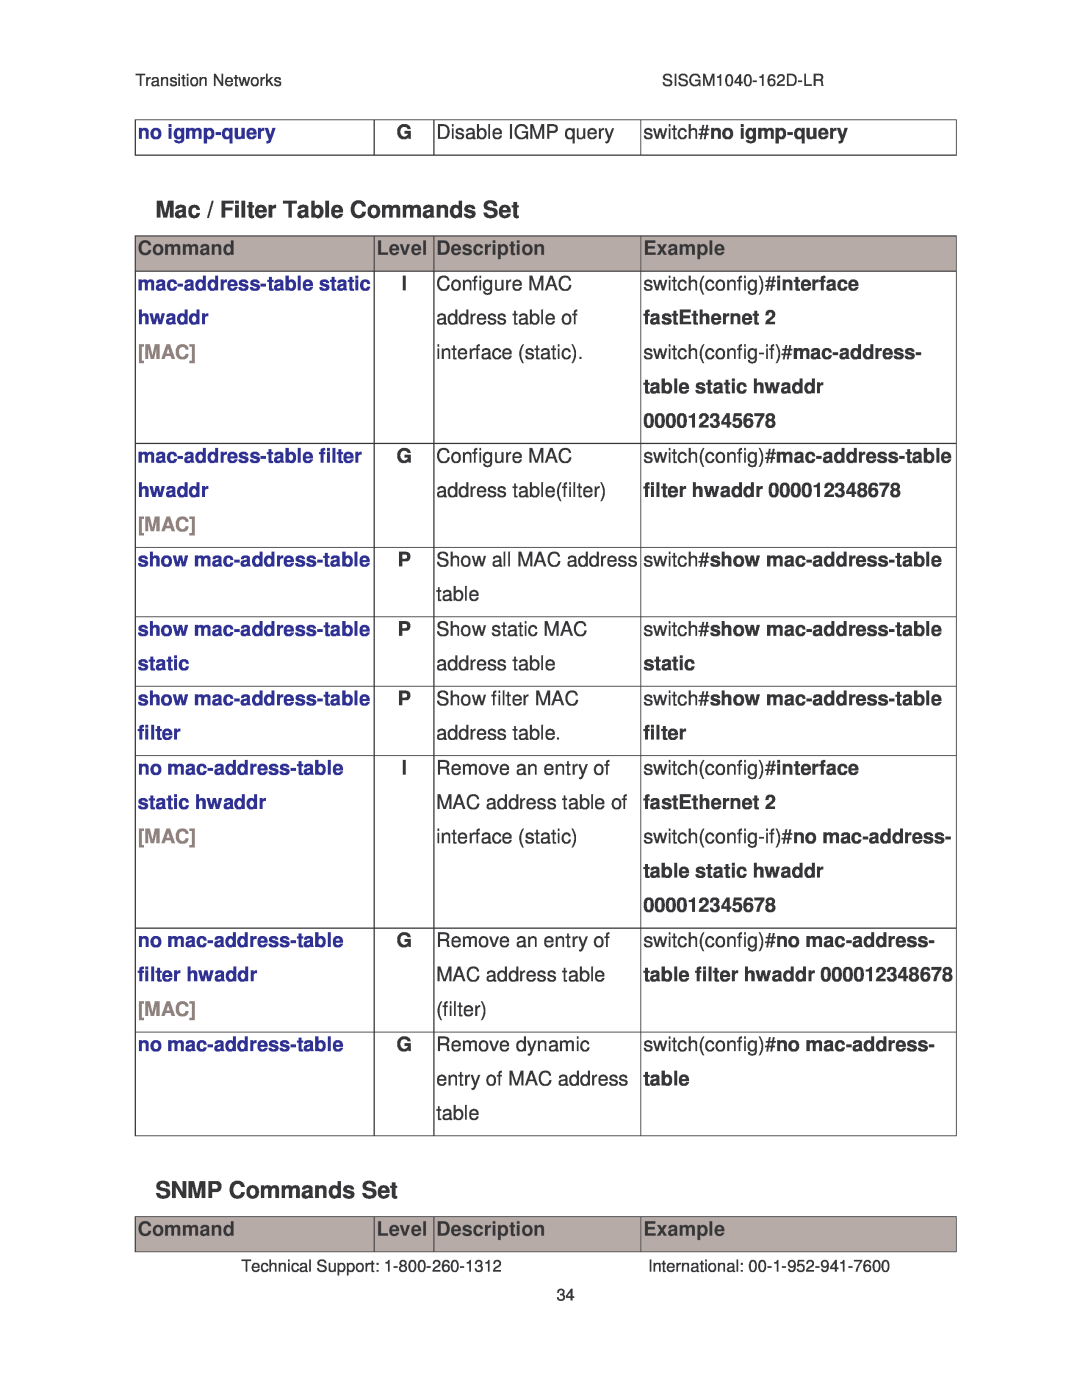 Transition Networks SISGM1040-162D manual Mac / Filter Table Commands Set, SNMP Commands Set 